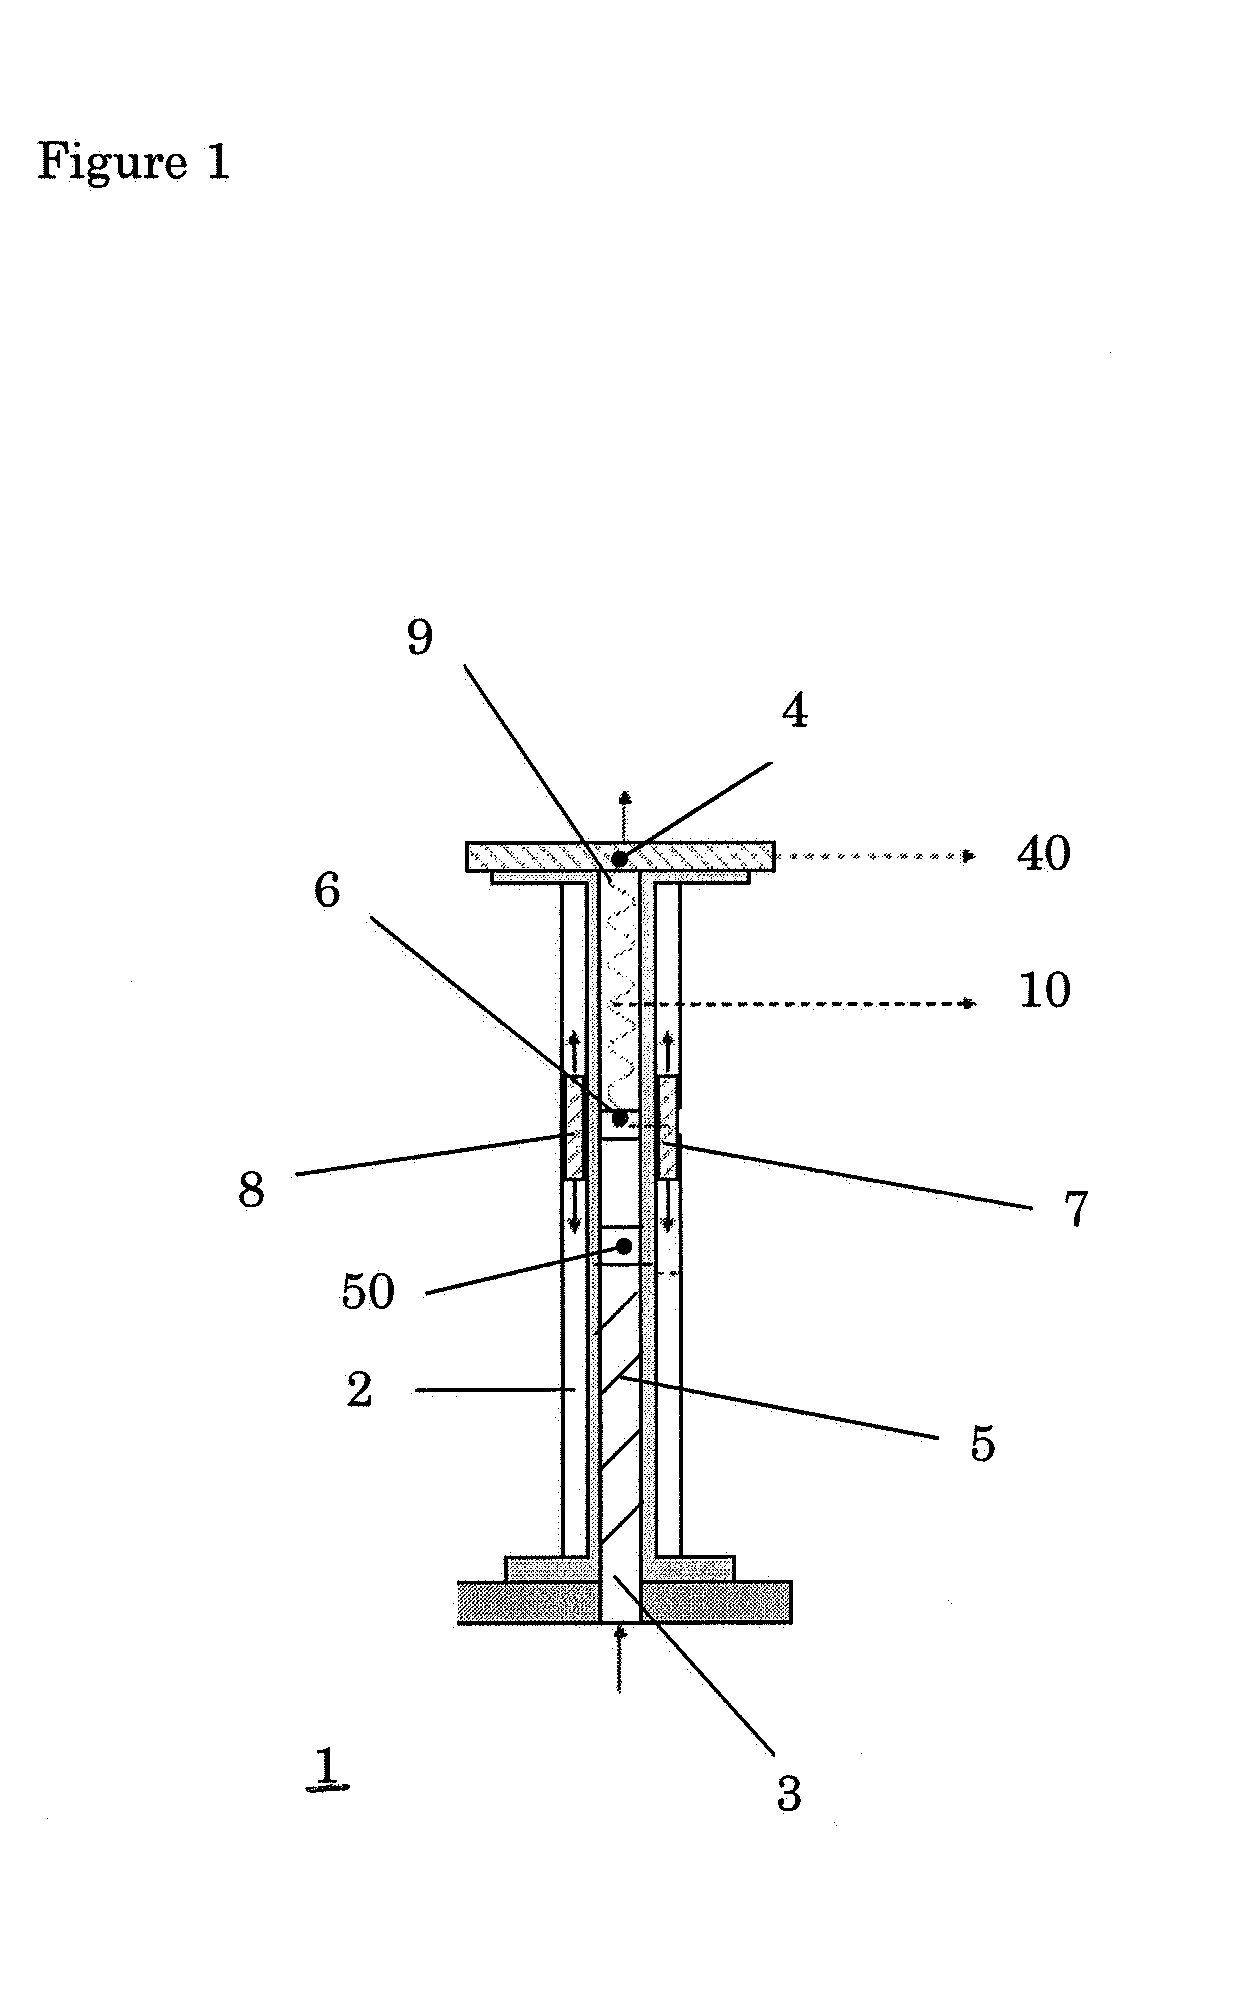 Chromatographic column system